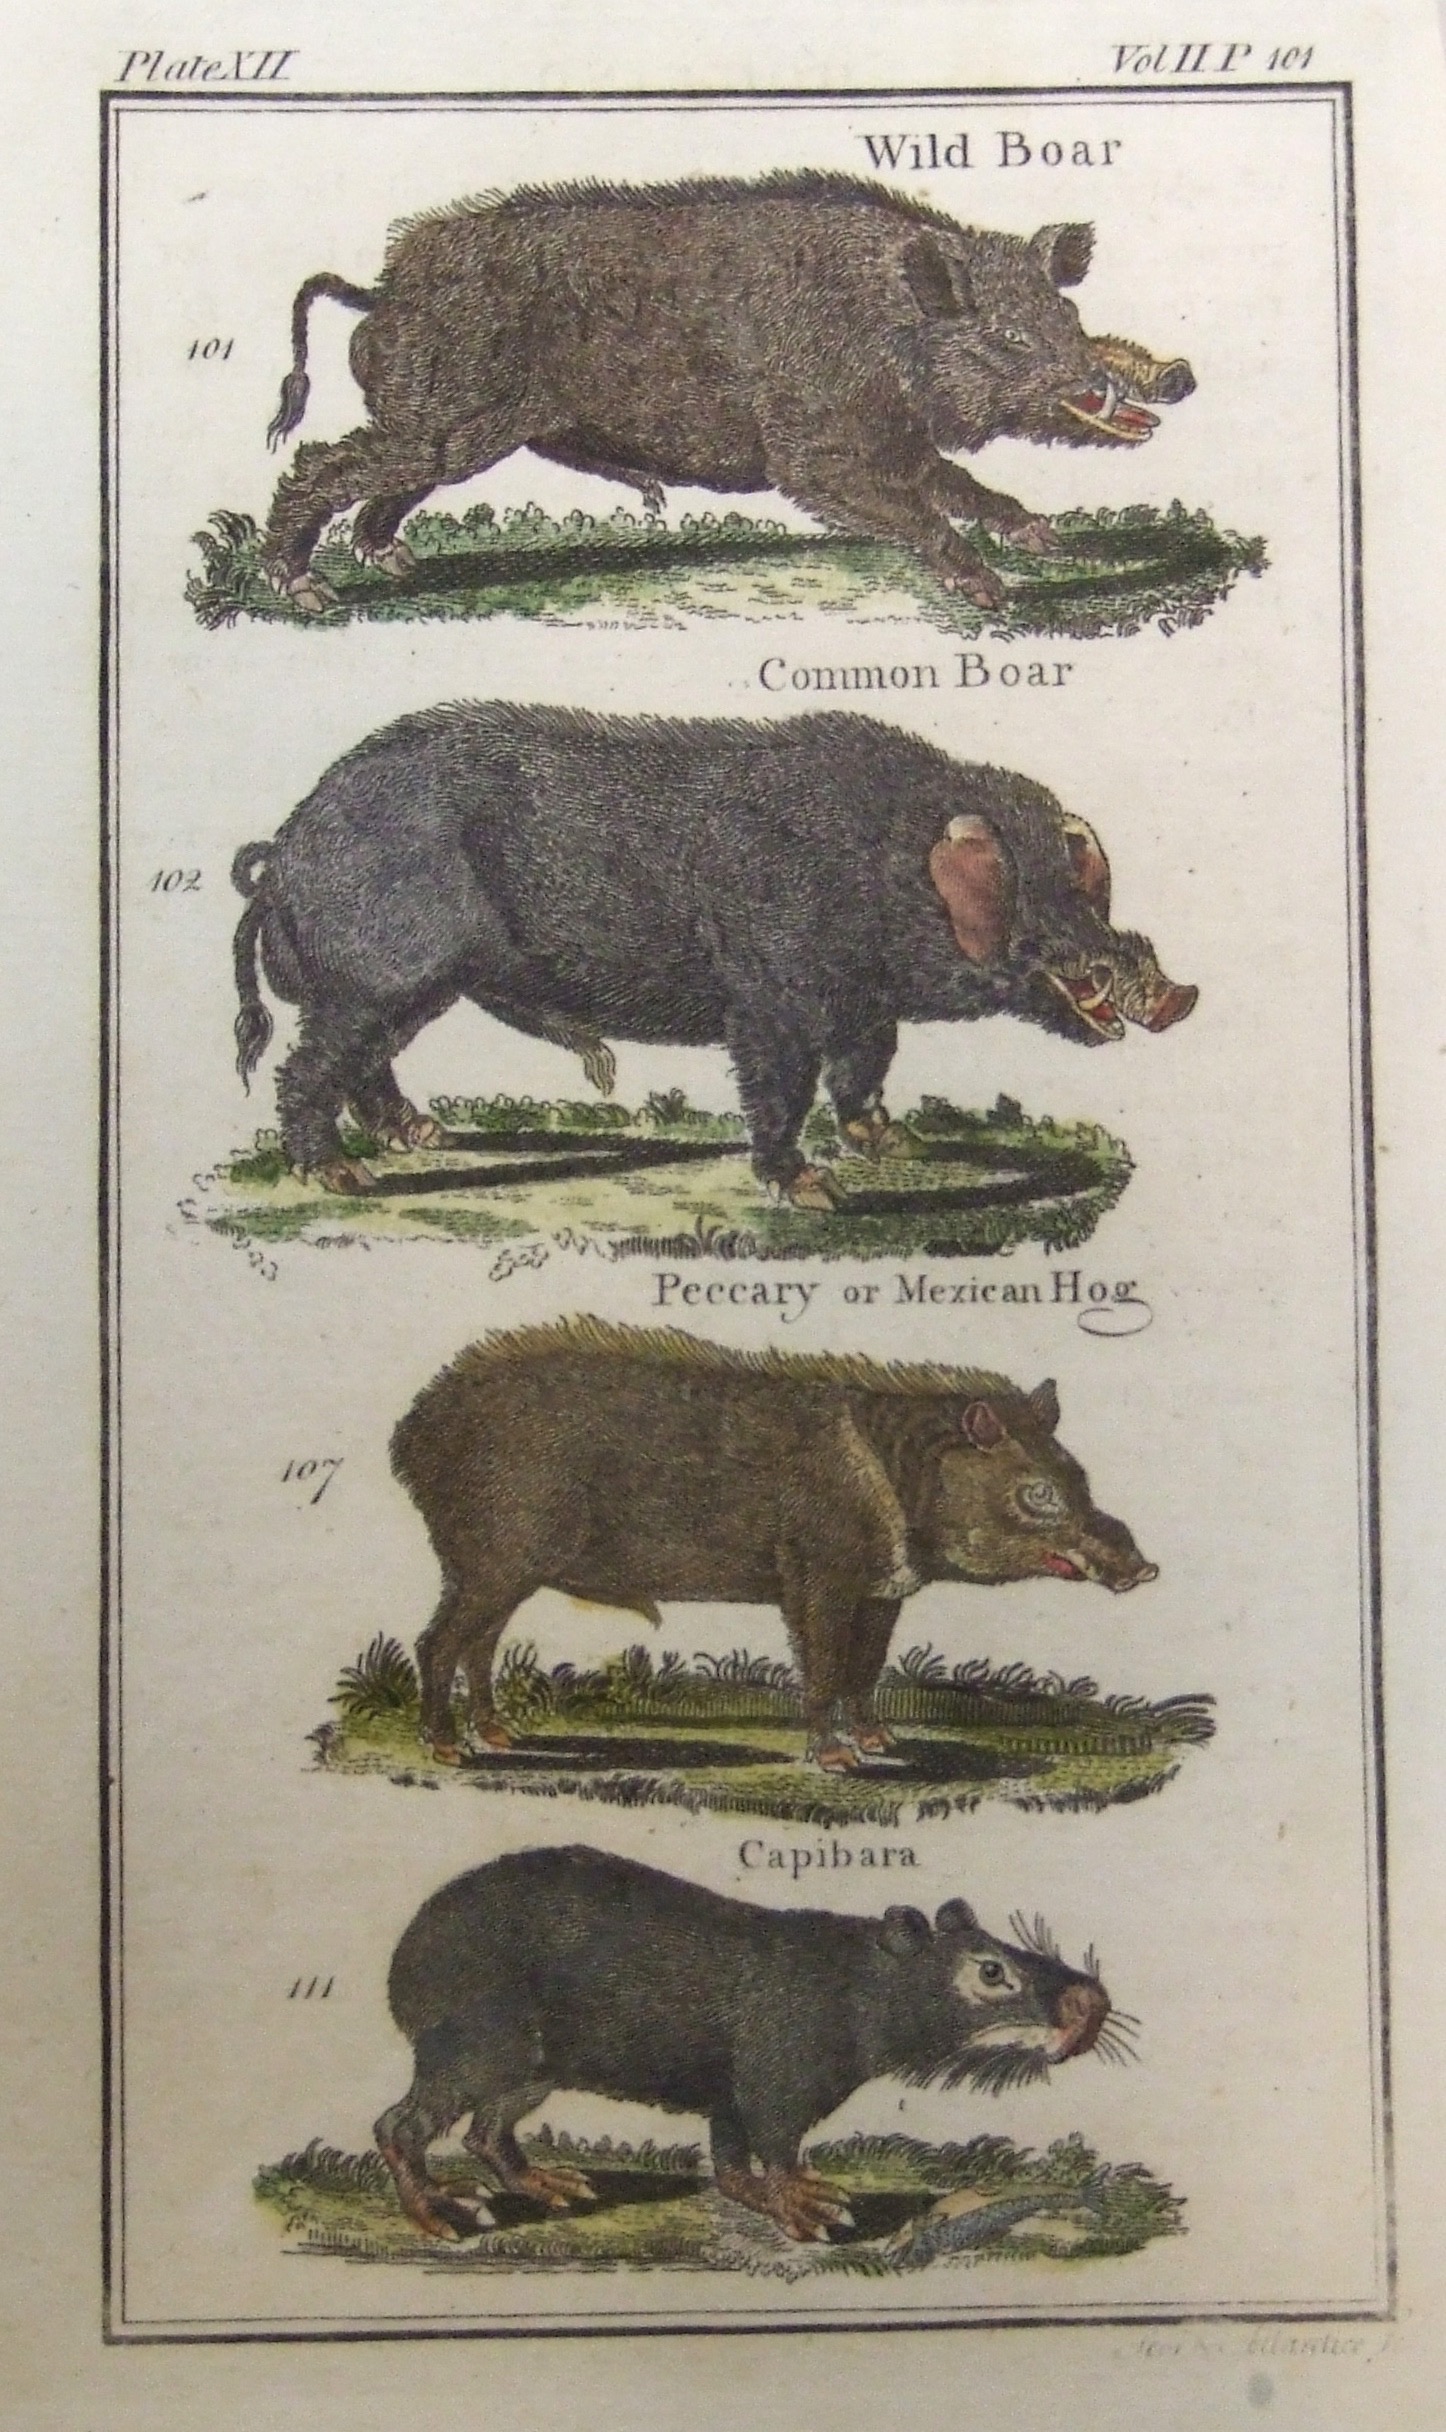 Wild Boar, Common Boar, Peccary or Mexican Hog, Capibara